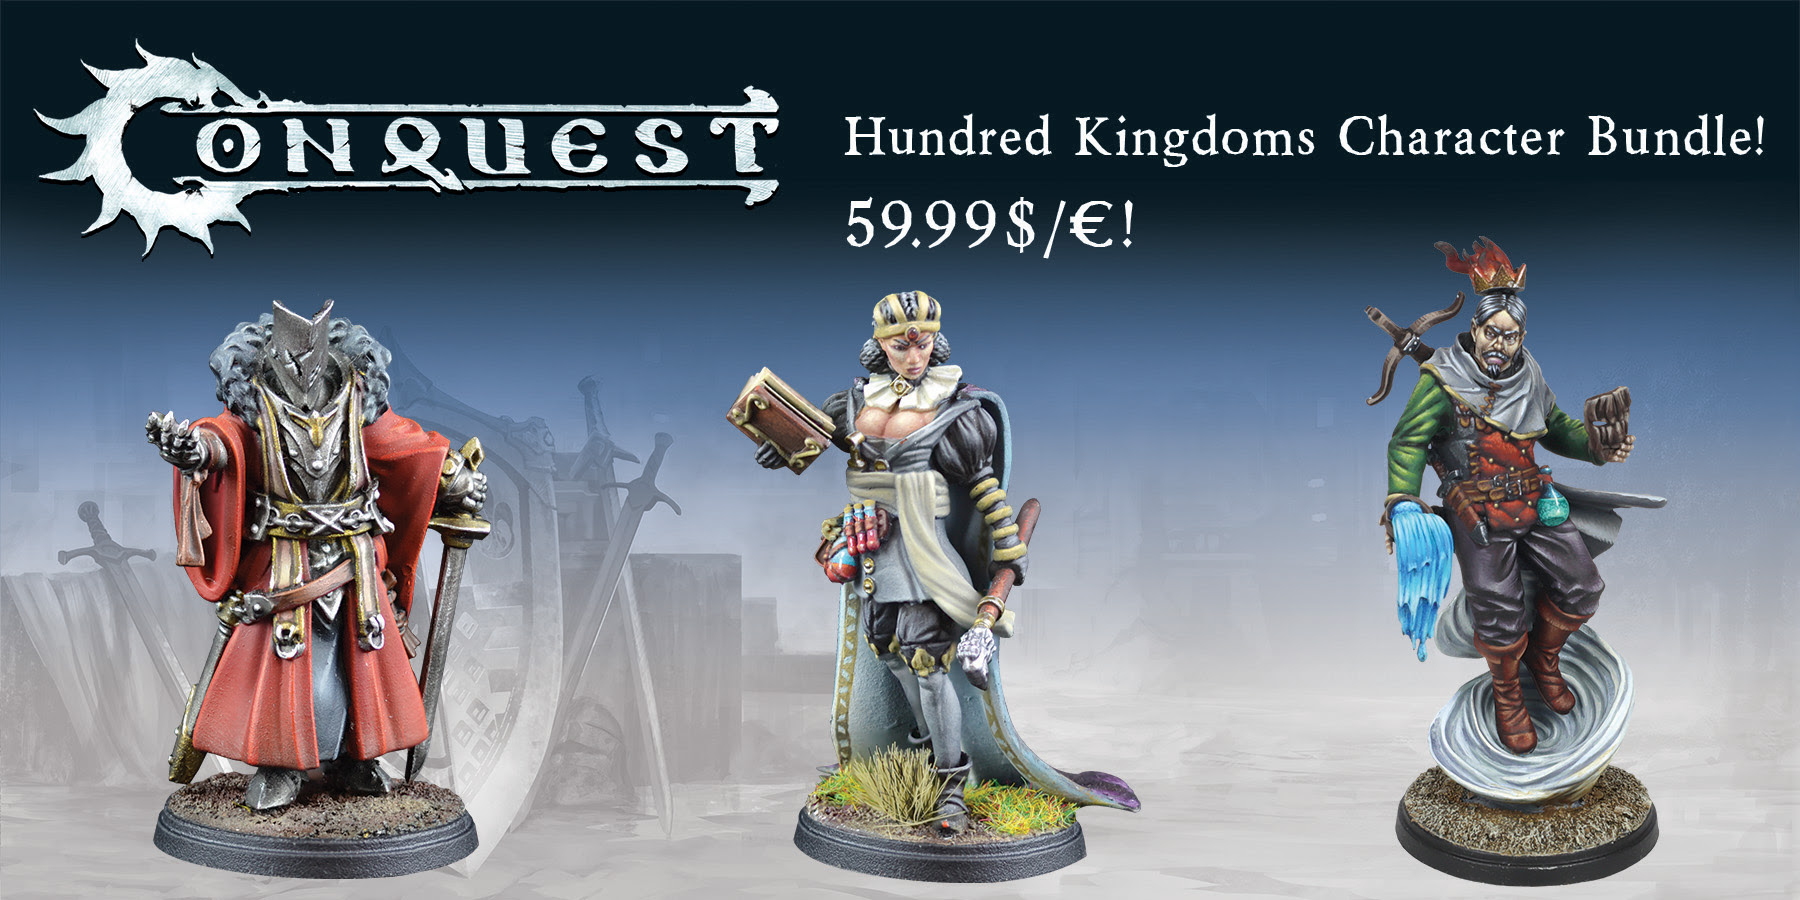 Hundred Kingdoms Character Bundle - Conquest